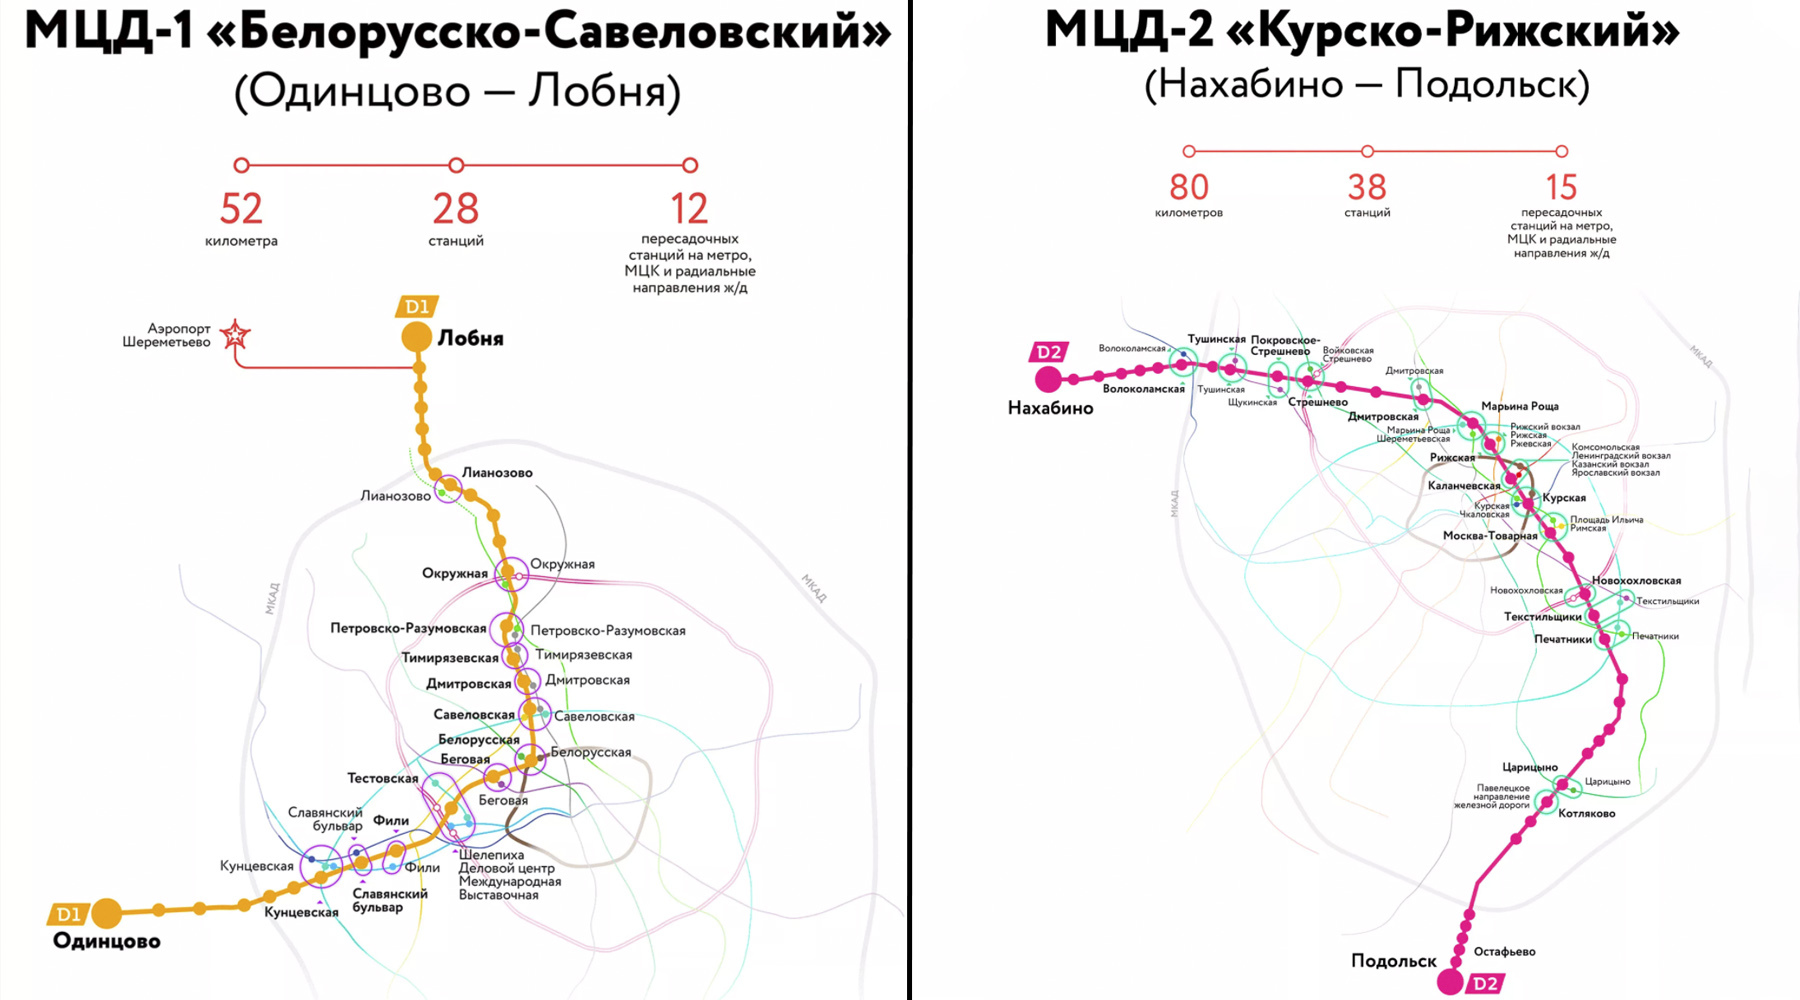 Схема метро с мцд 4